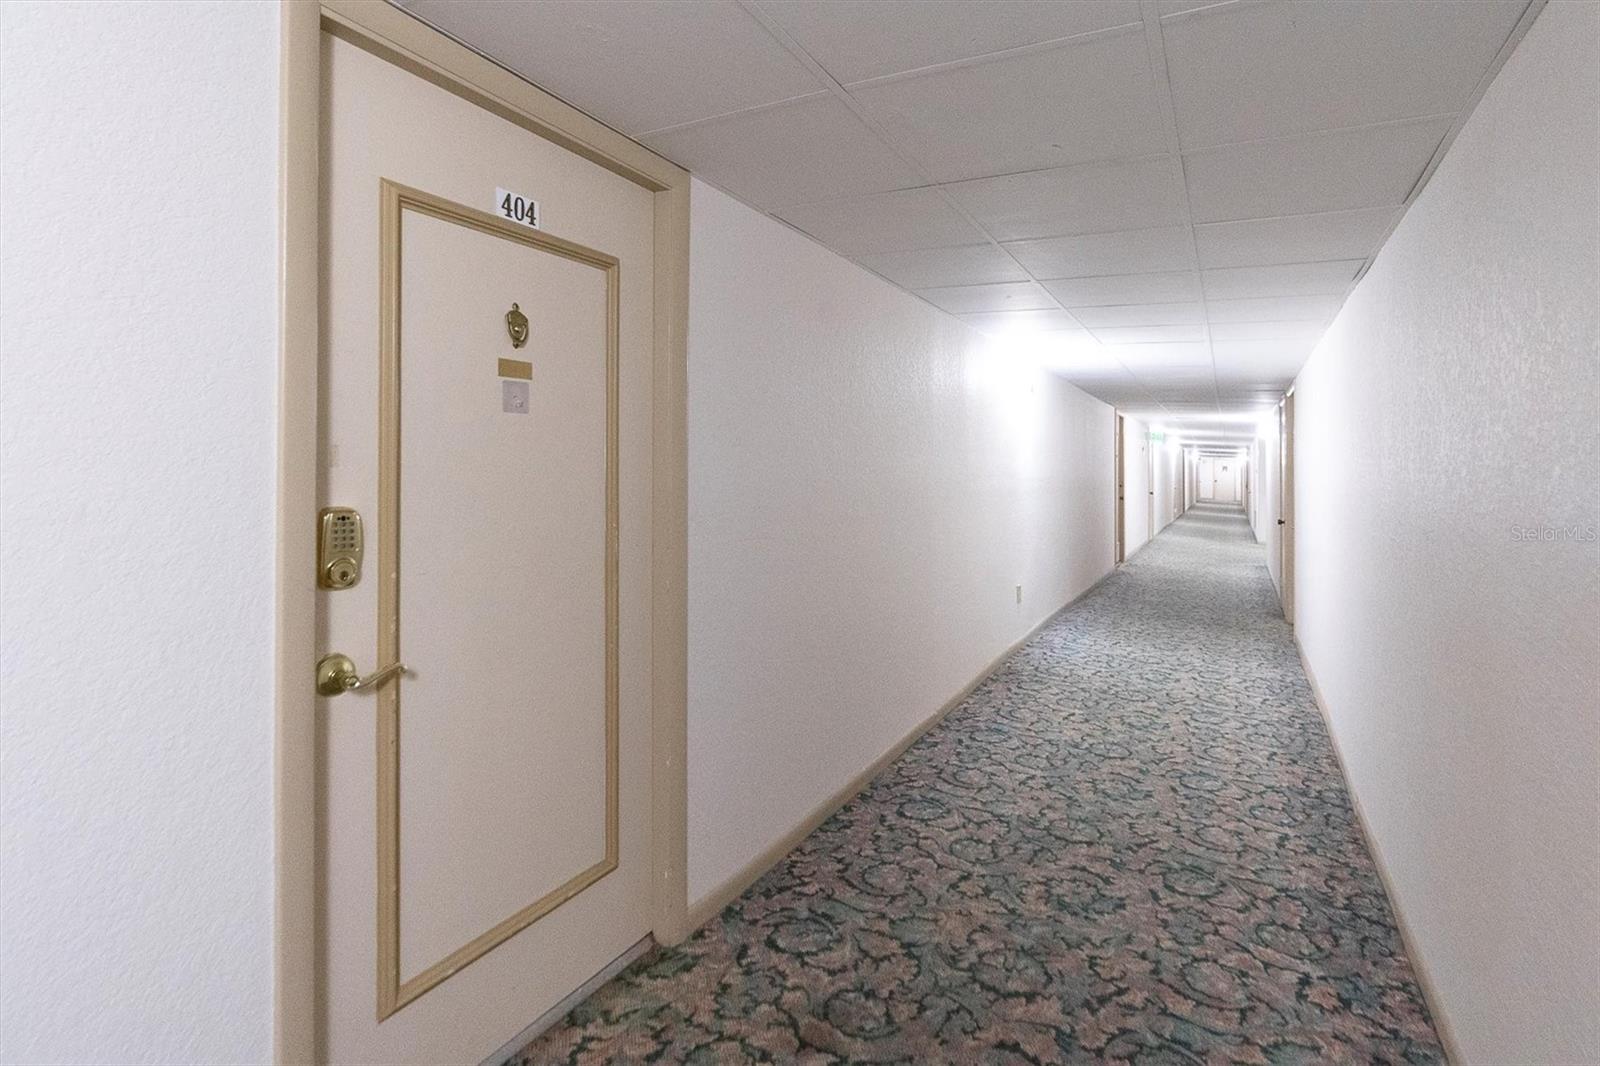 Inside corridor leading to 9-404